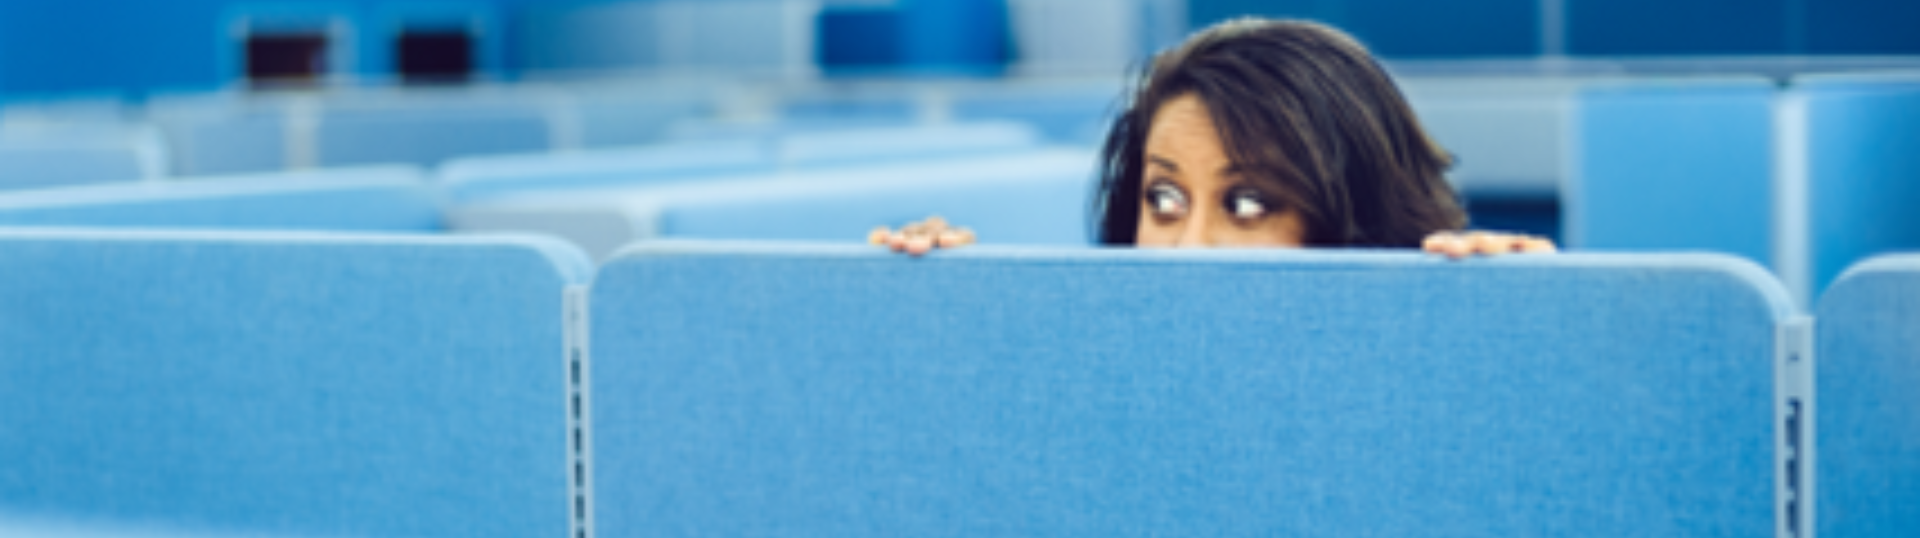  A woman hidden behind office cubicle